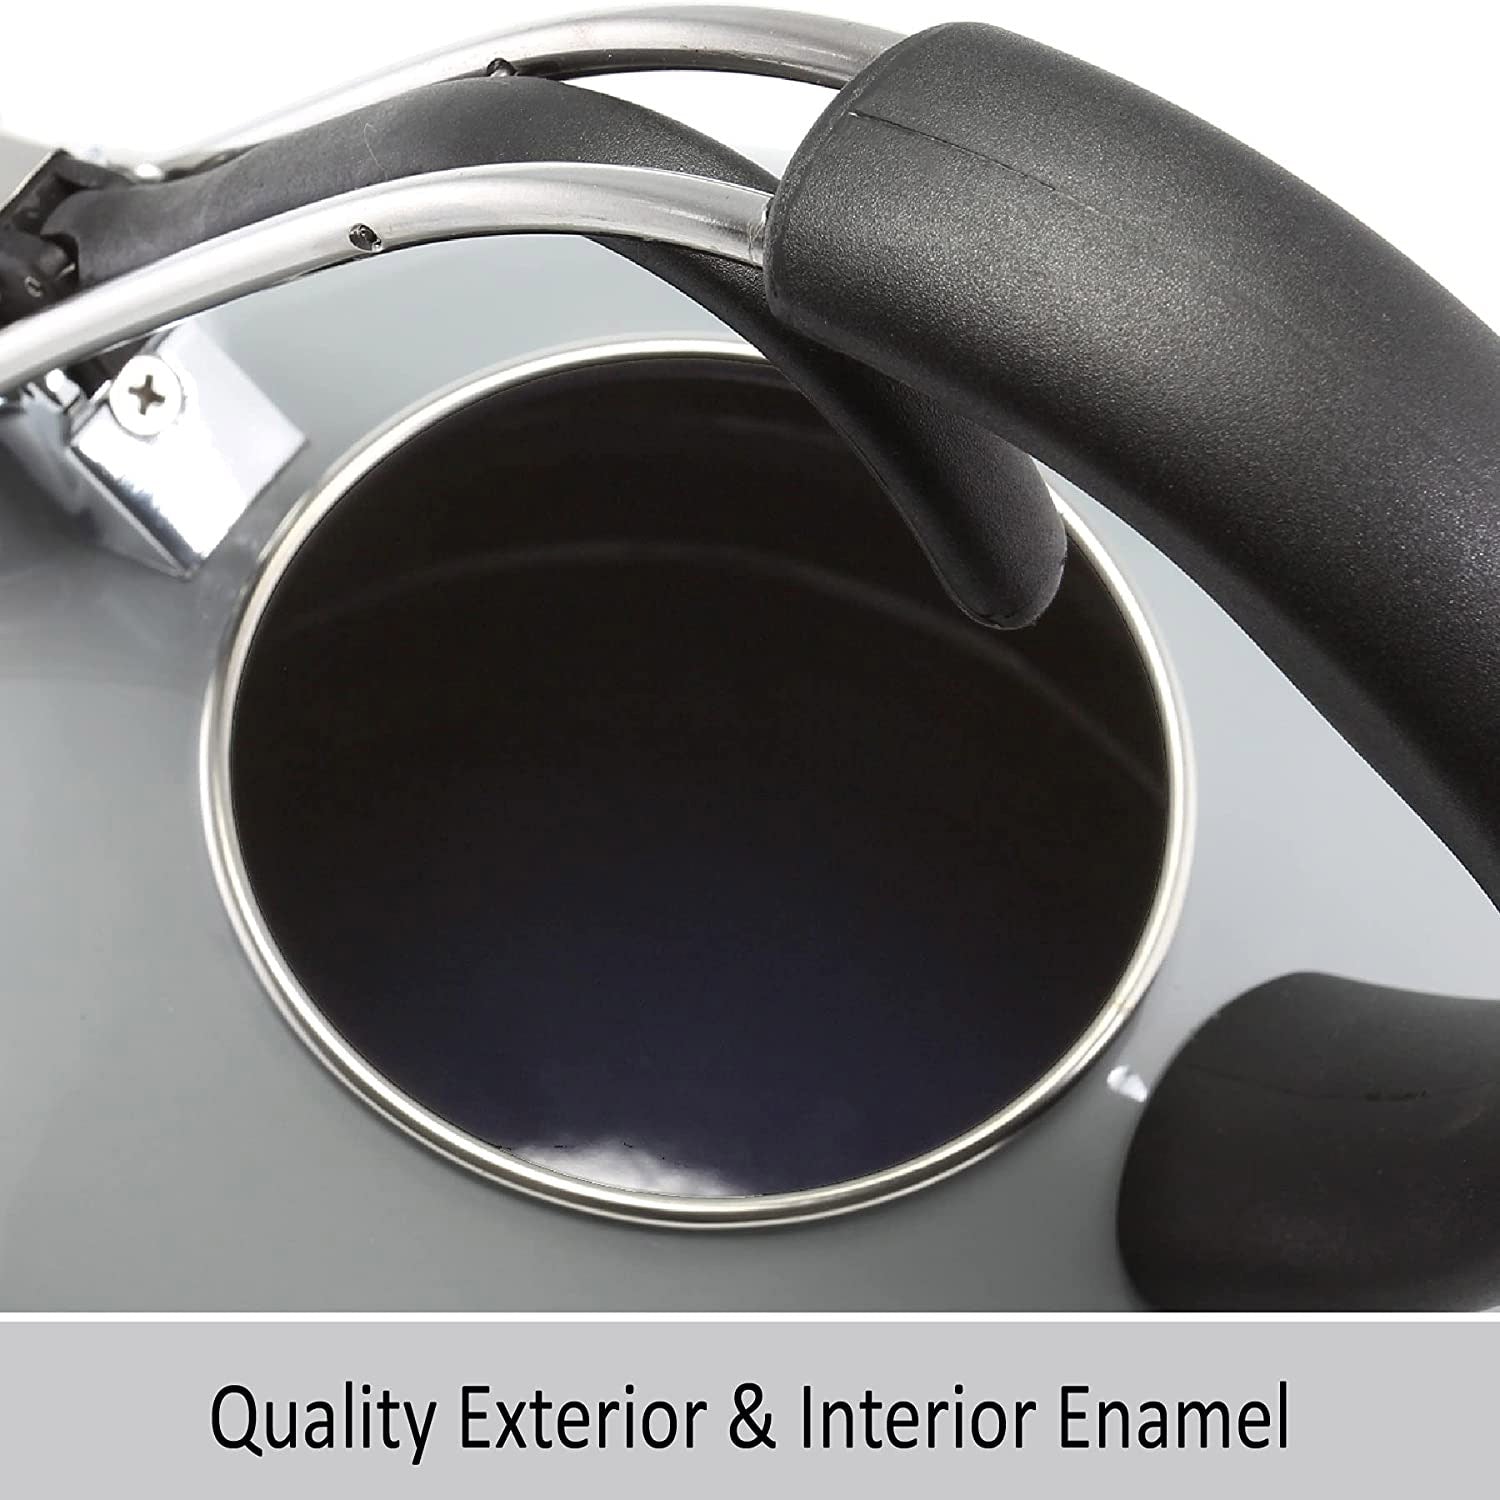 Chantal Lake Grey Enamel-on-Steel 1.7 Quart Vintage Teakettle